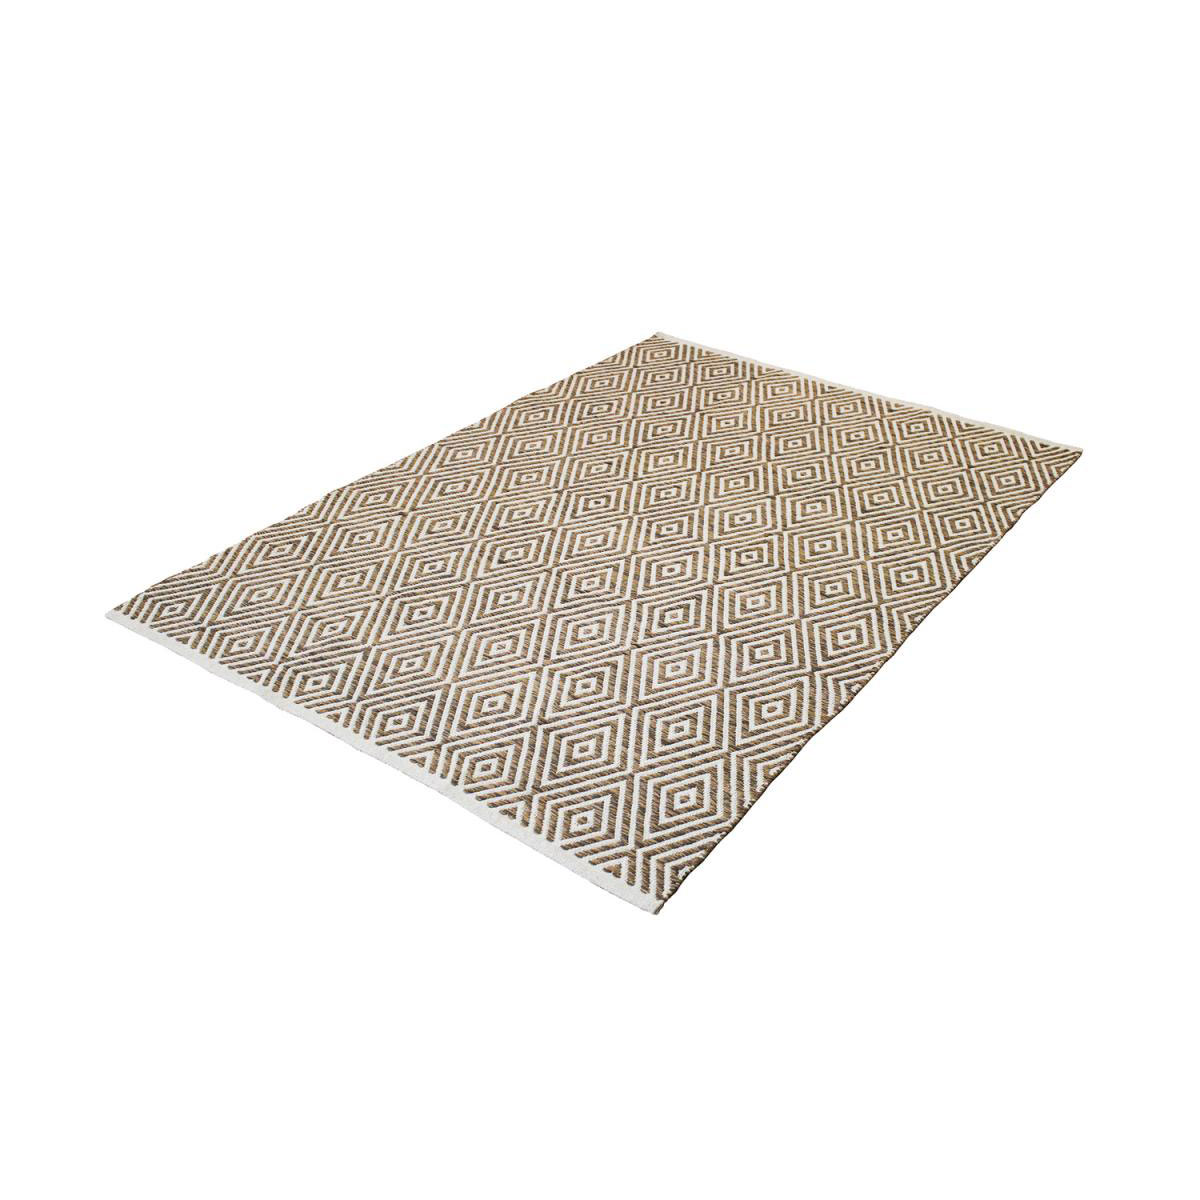 Teppich „Aperitif“ 310 Beige/Braun, 160x230cm